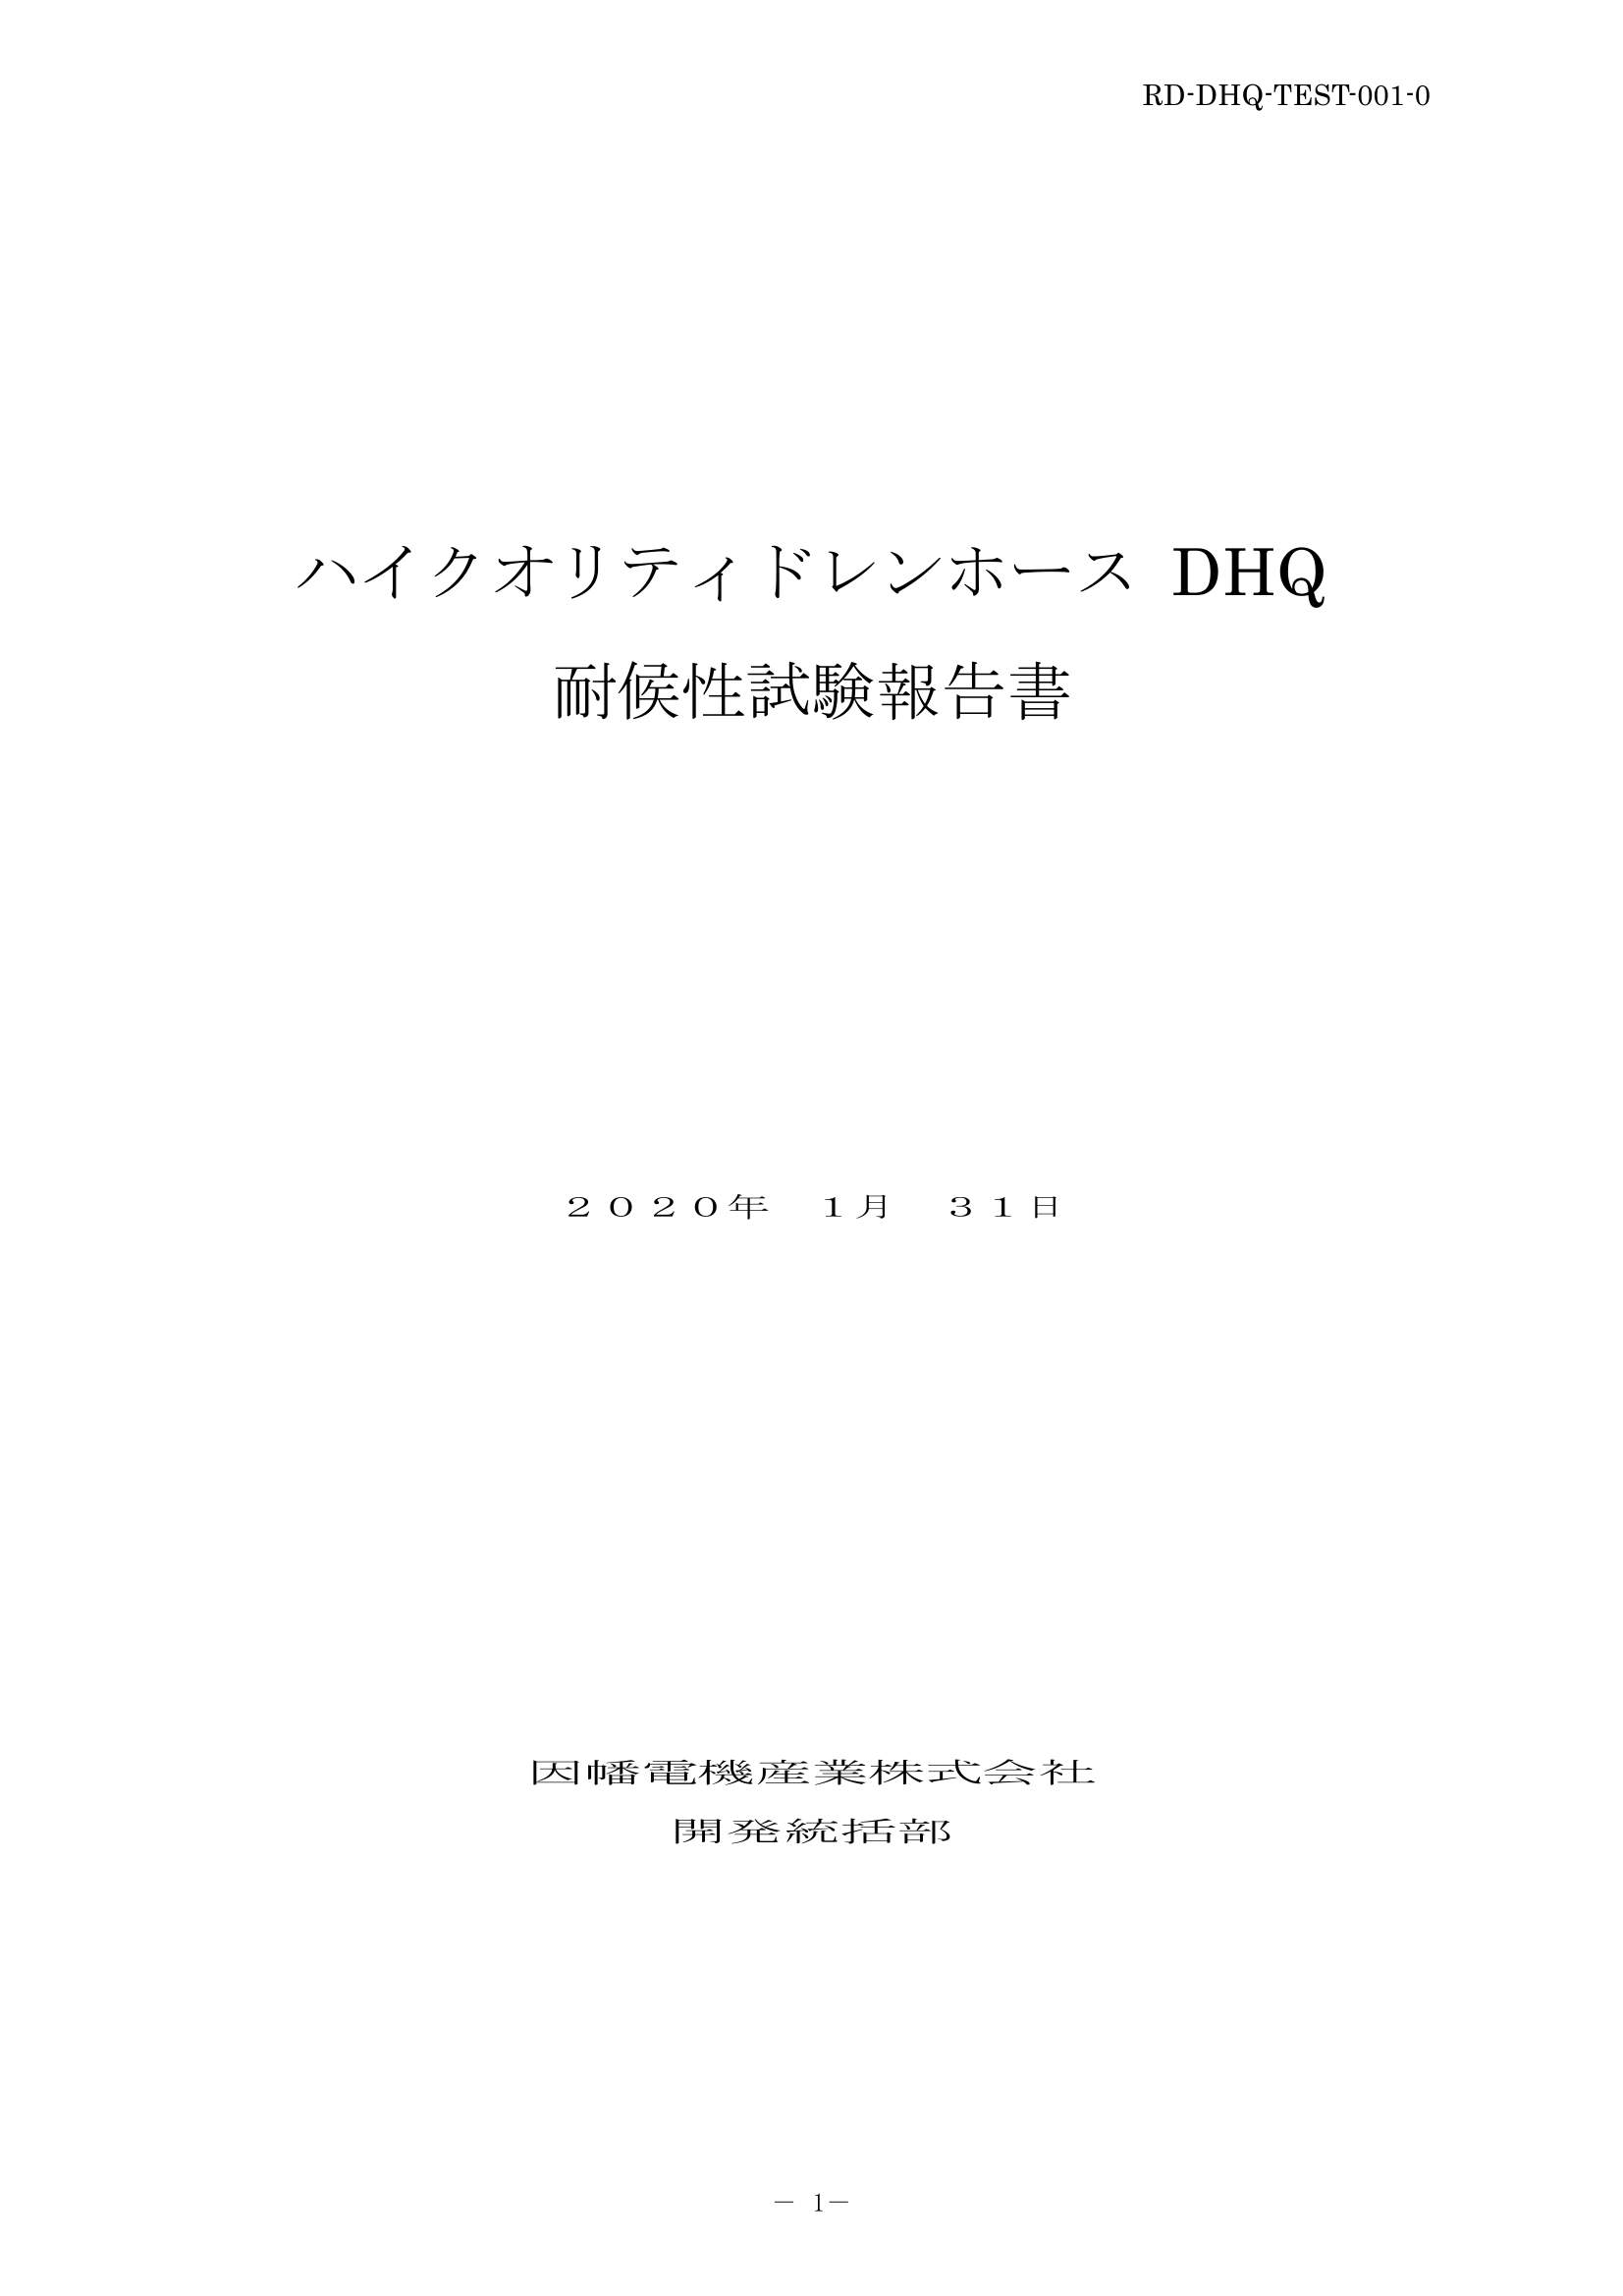 DHQ_耐候性試験報告書_20200131.pdf